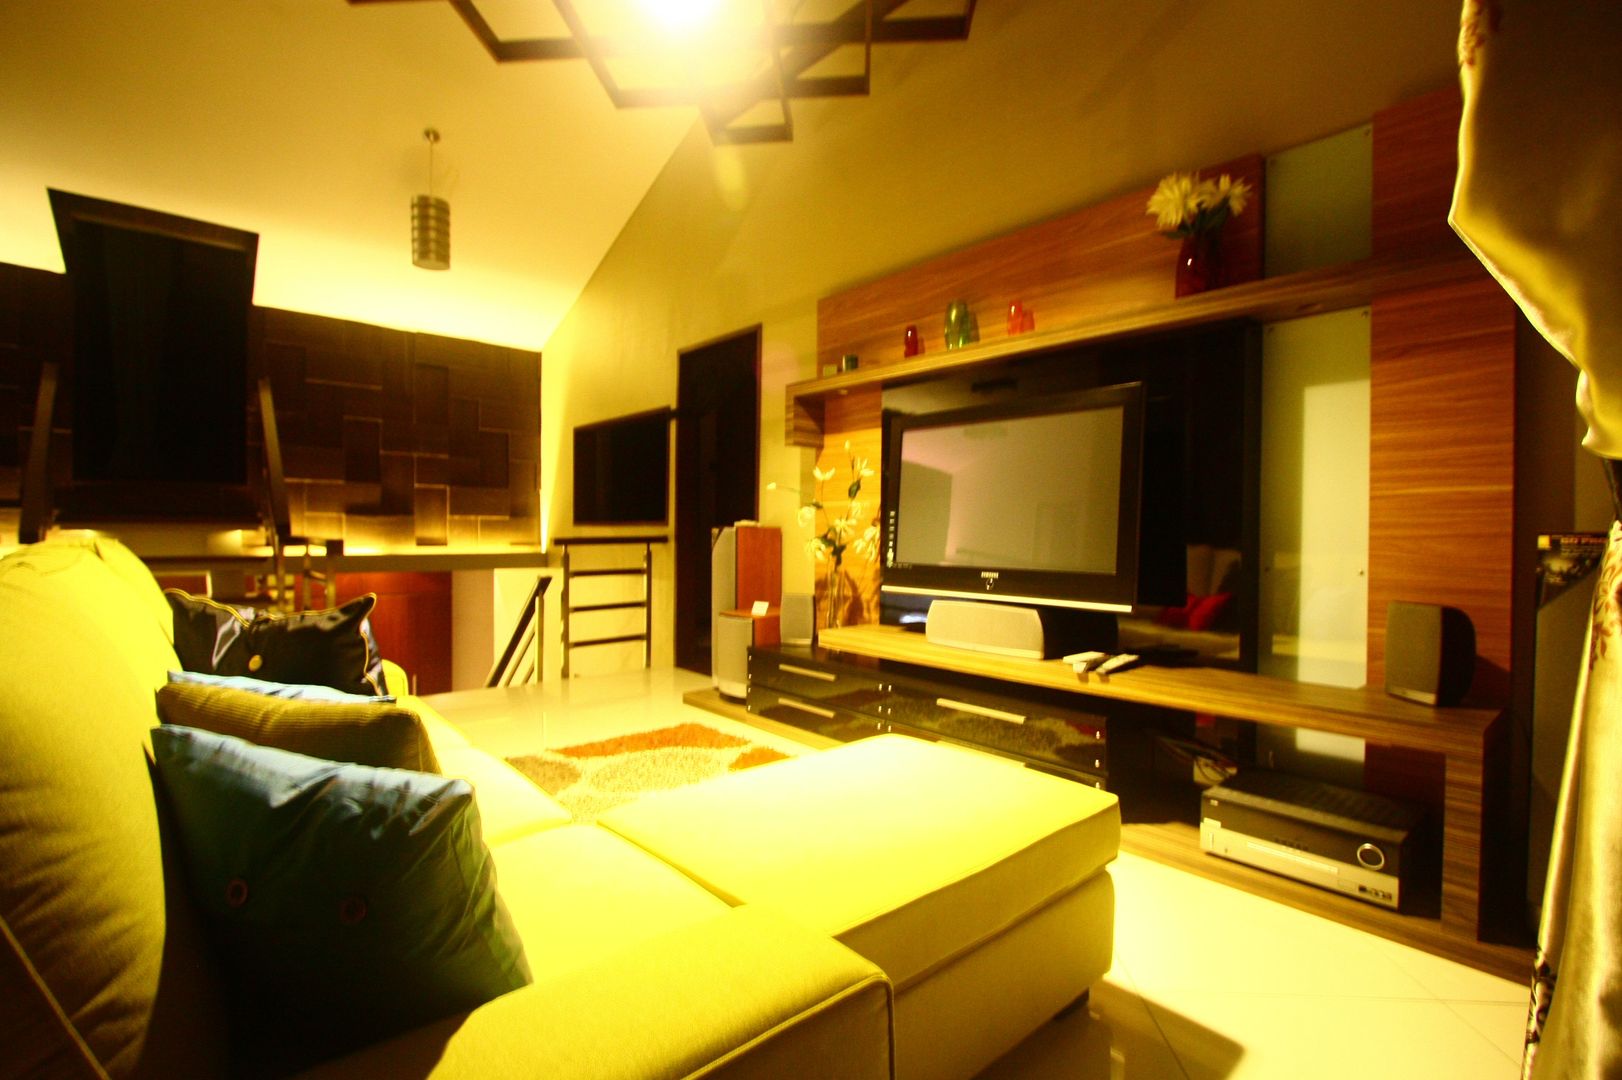 Romantic lounge & living room kota wisata cibubur, Exxo interior Exxo interior Nowoczesny pokój multimedialny